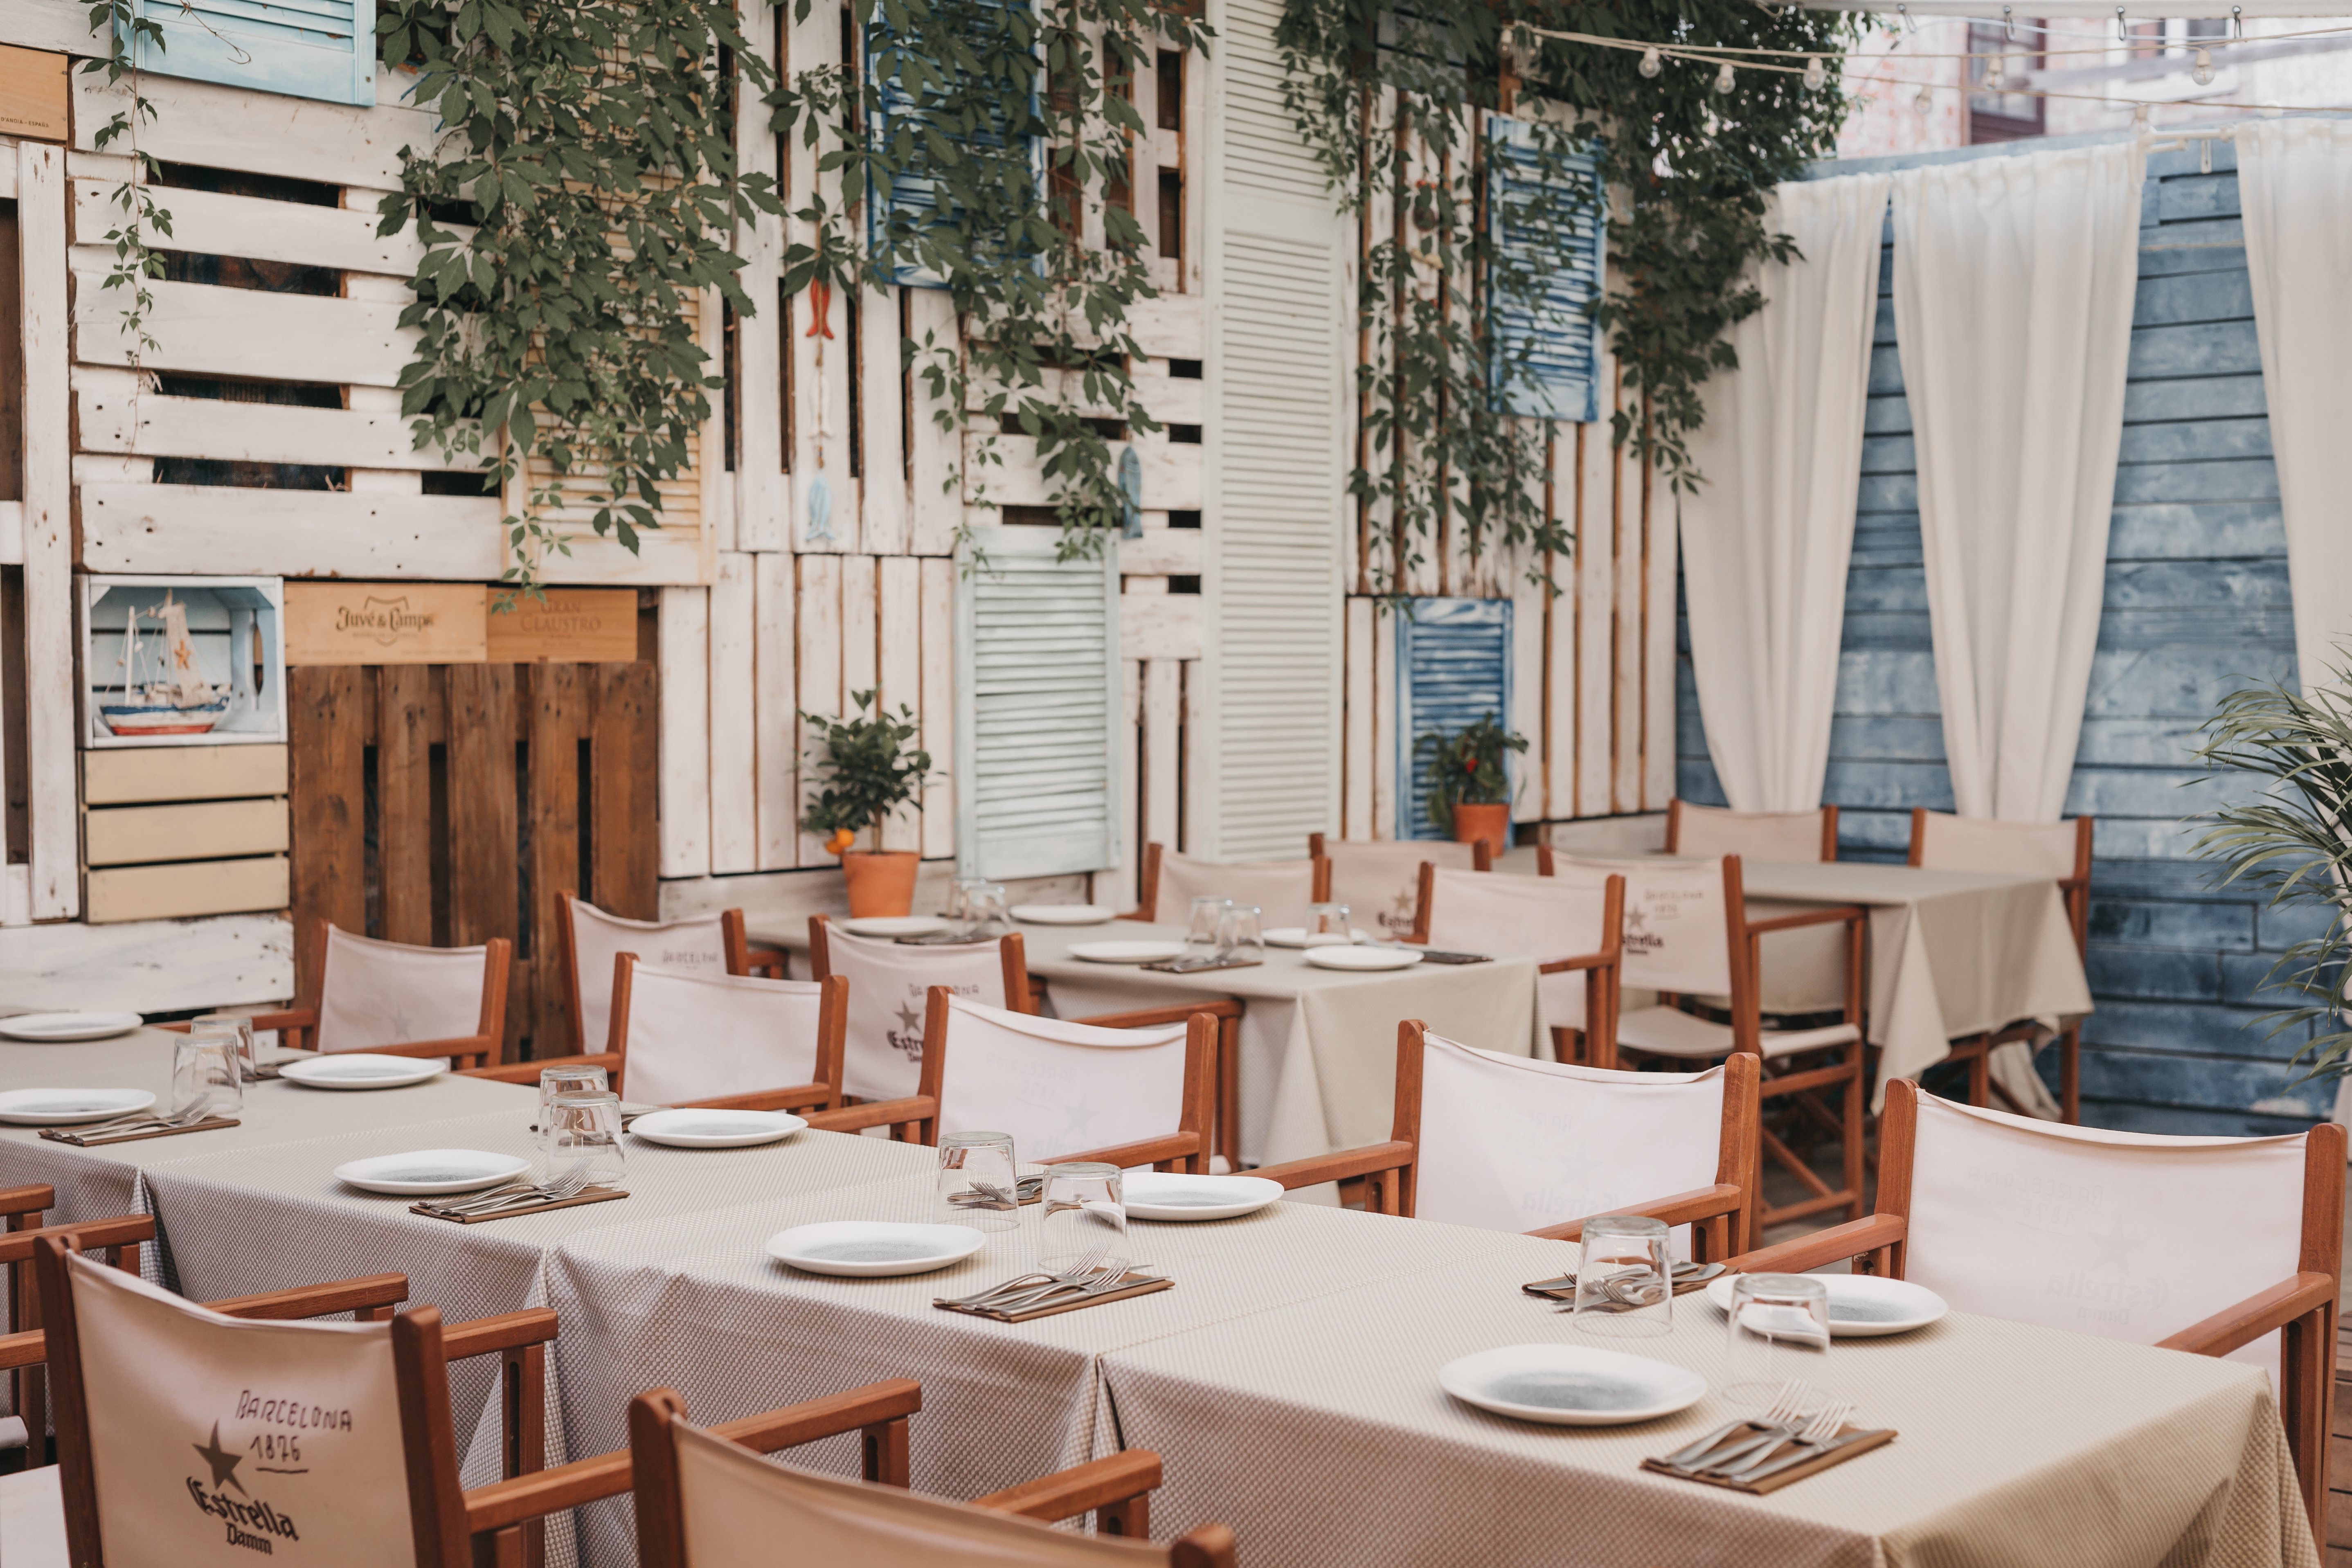 El Mercado - most instagrammable restaurants in Vilnius